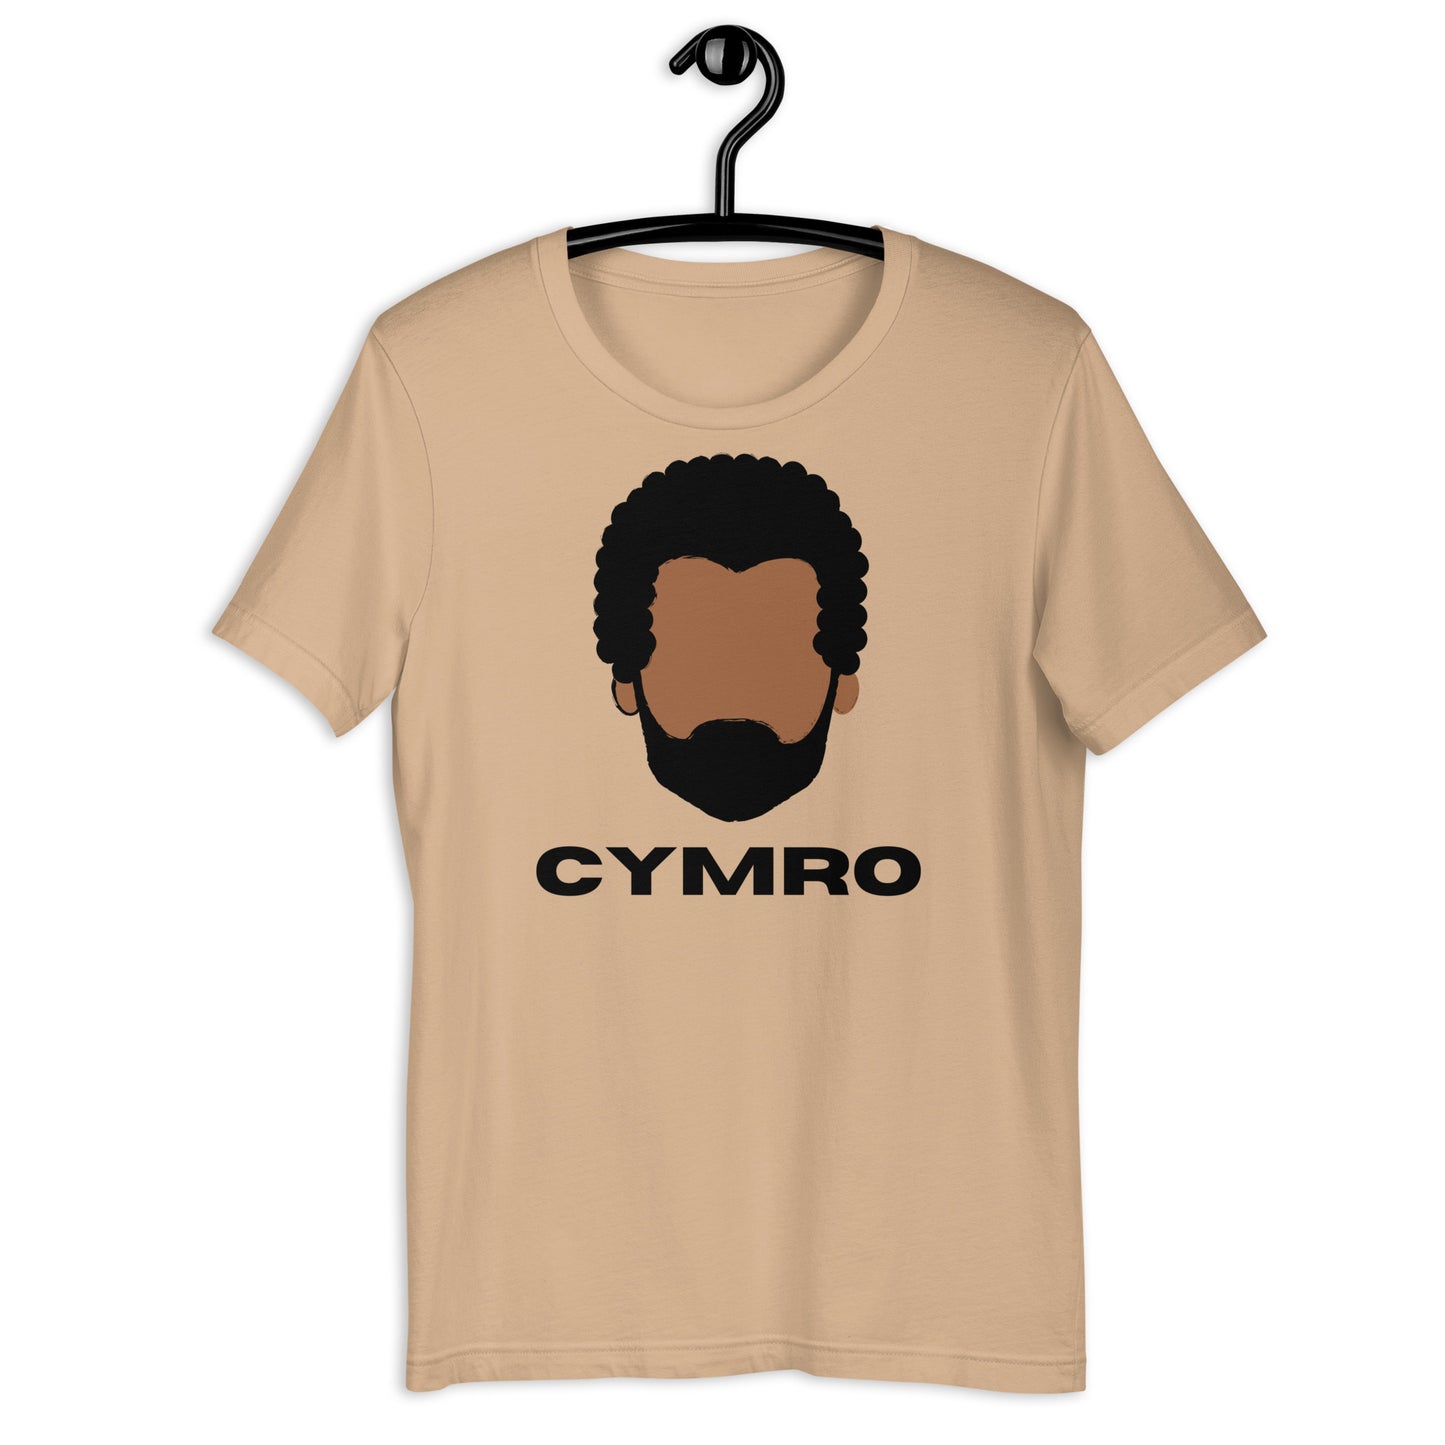 Cymro - Unisex t-shirt